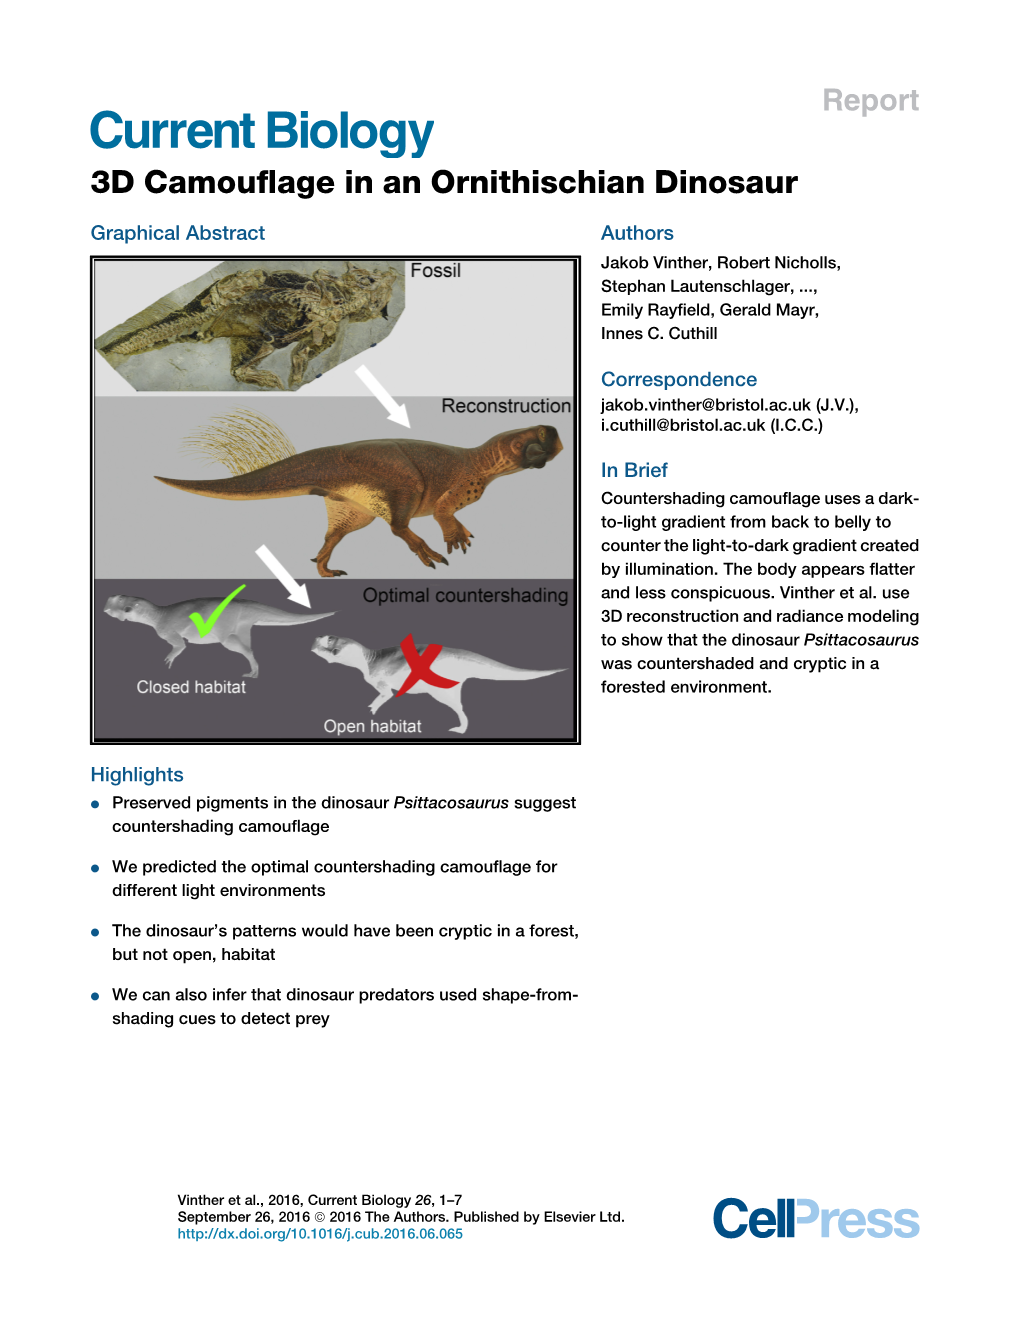 3D Camouflage in an Ornithischian Dinosaur